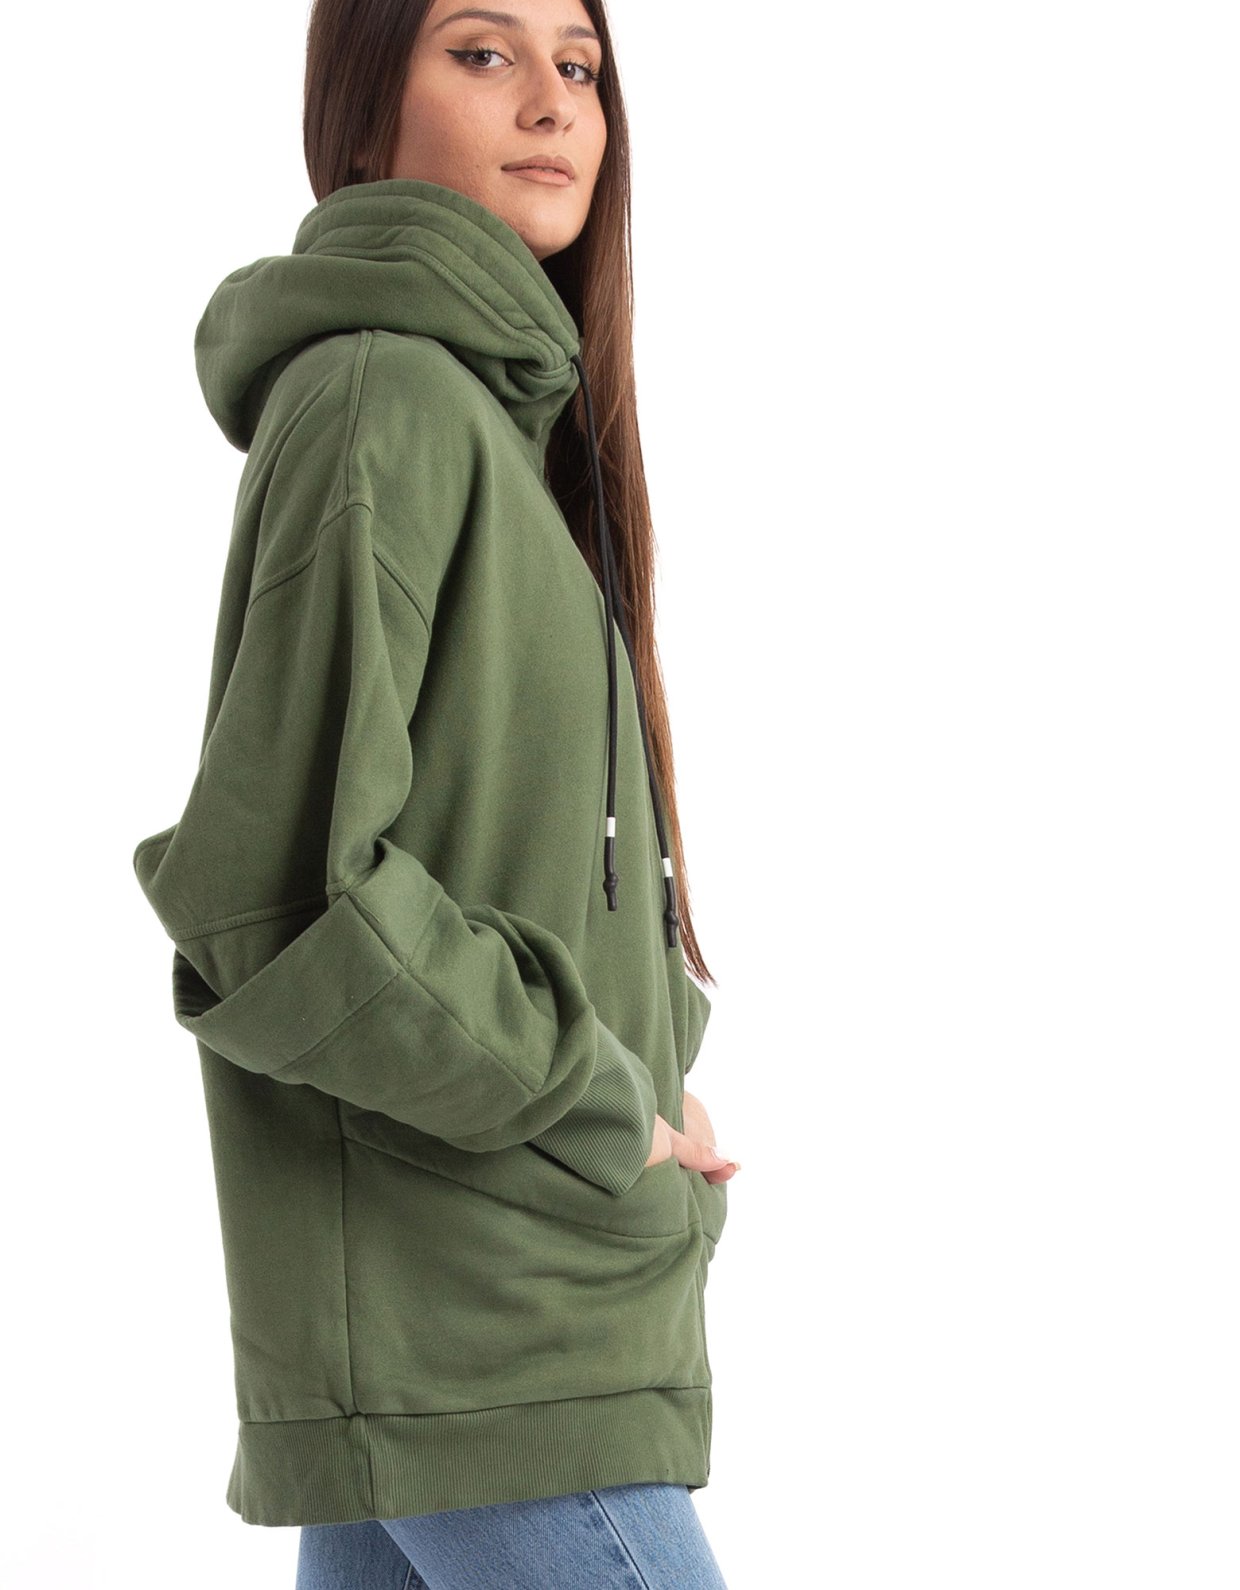 Nadia Rapti Universe hoodie zip khaki